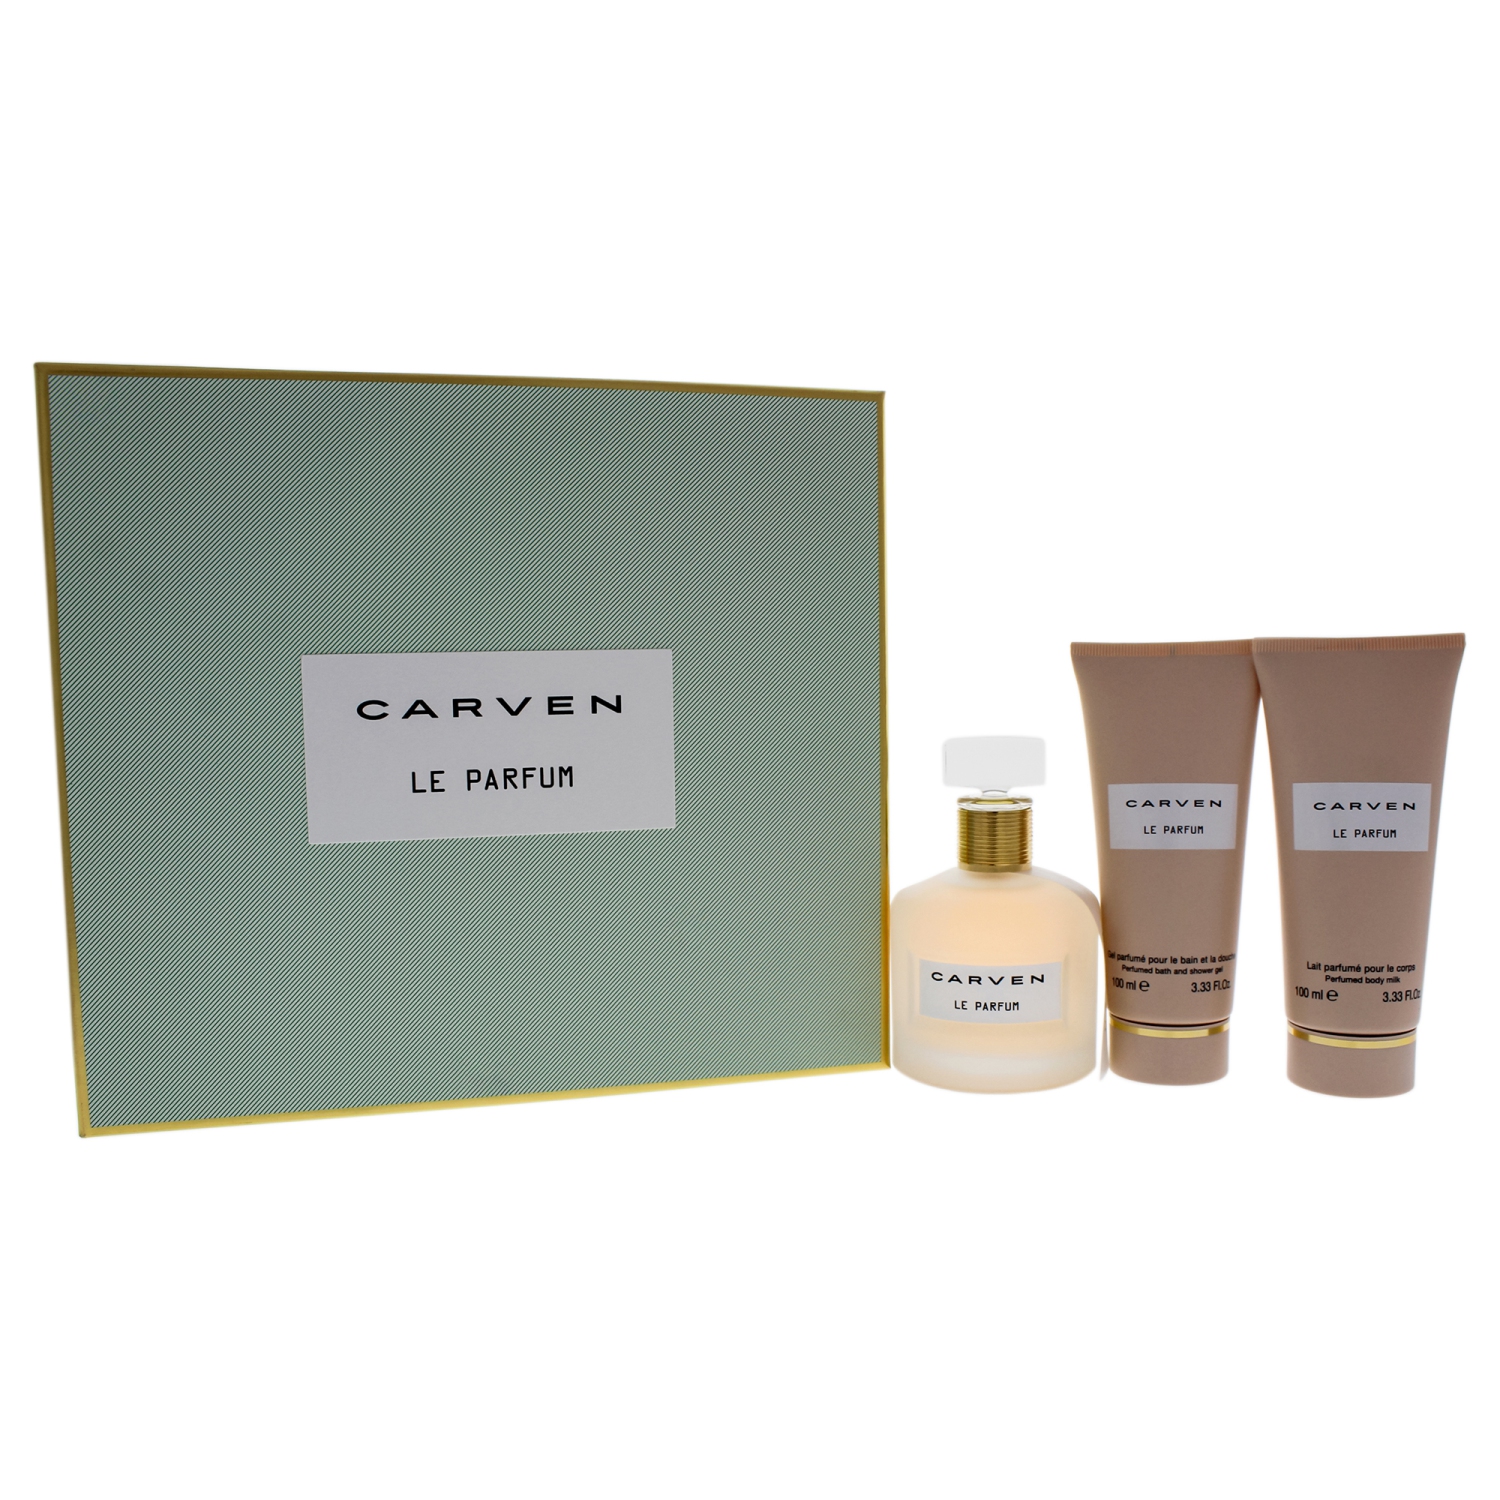 Le Parfum by Carven for Women - 3 Pc Gift Set 3.33oz EDP Spray, 3.33oz Perfumed Body Milk, 3.33oz Pe